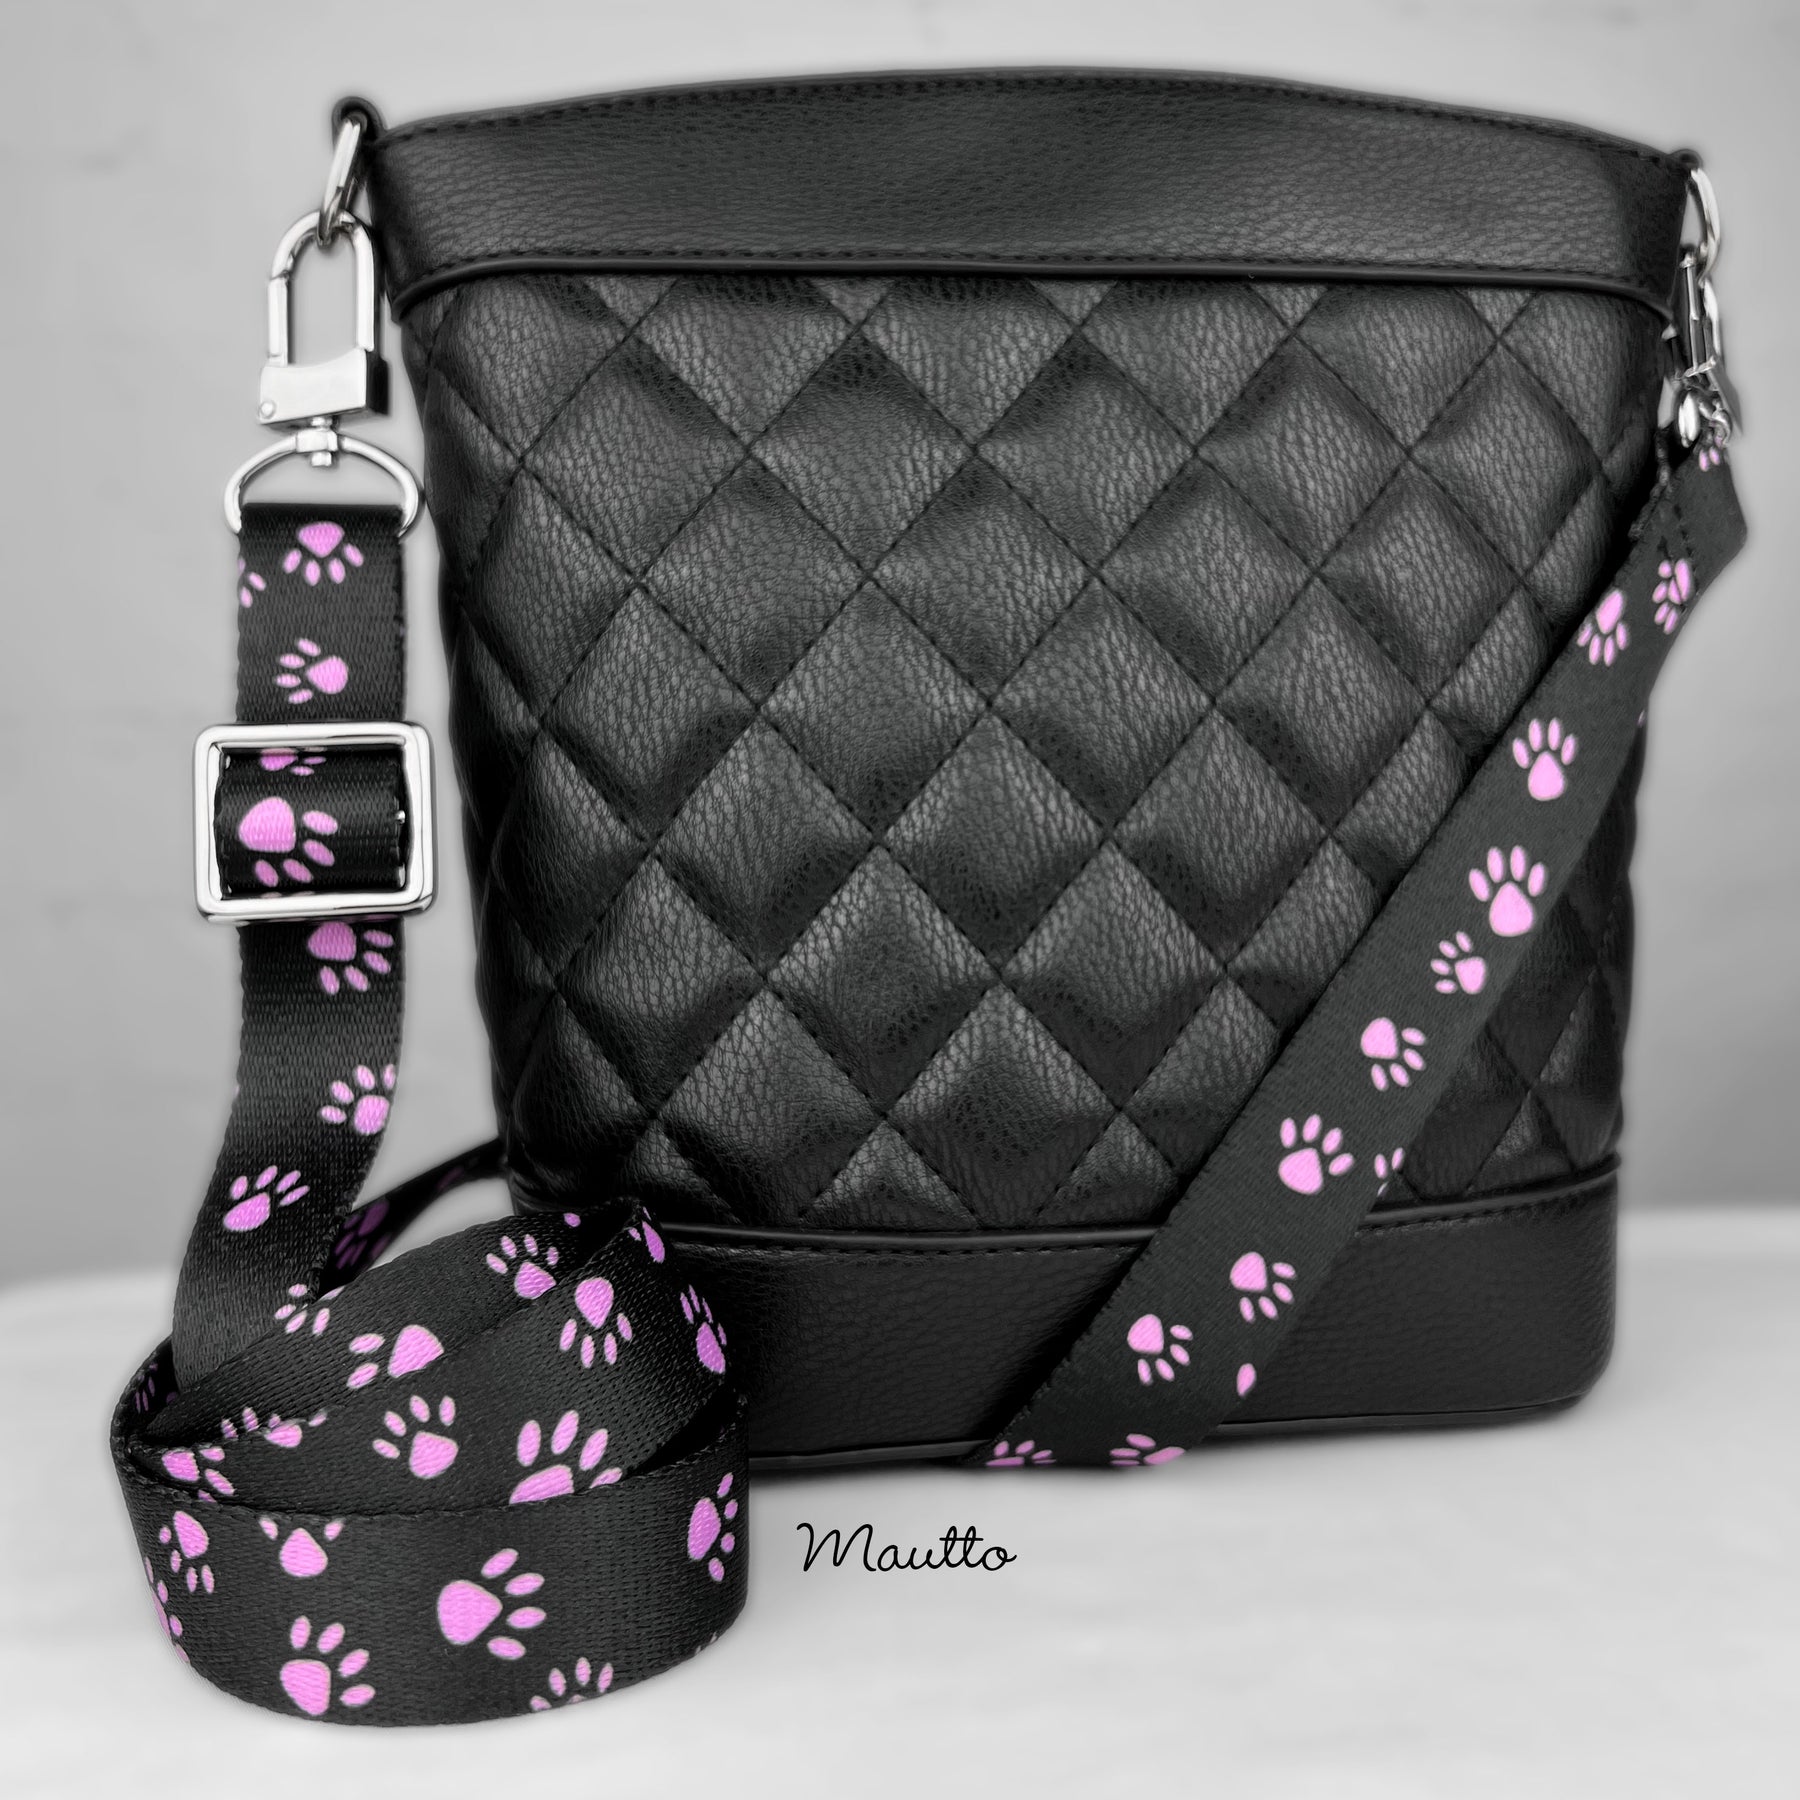 Custom Replacement Straps & Handles for Chanel Handbags/Purses/Bags, Mautto Handbags